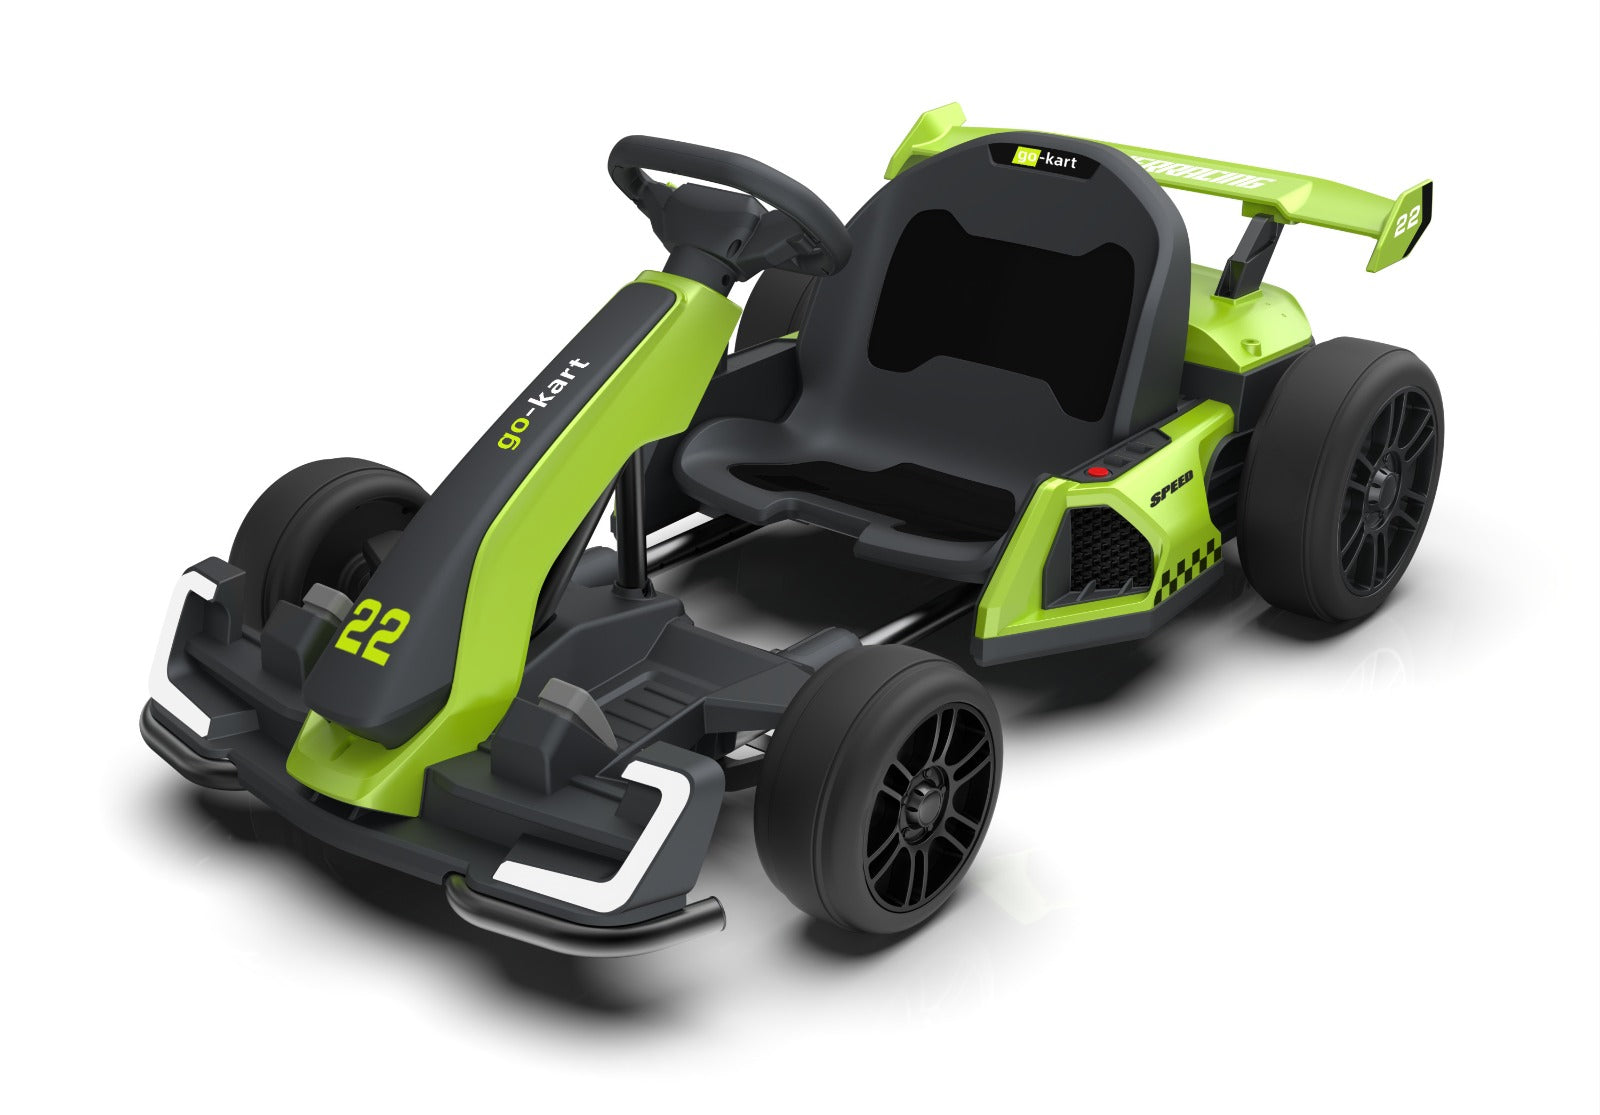 24 V Green Electric Go Kart Drifter 3.0 Ryder Toys Go Cart. Best Selling razor crazy cart electric gokart for kids